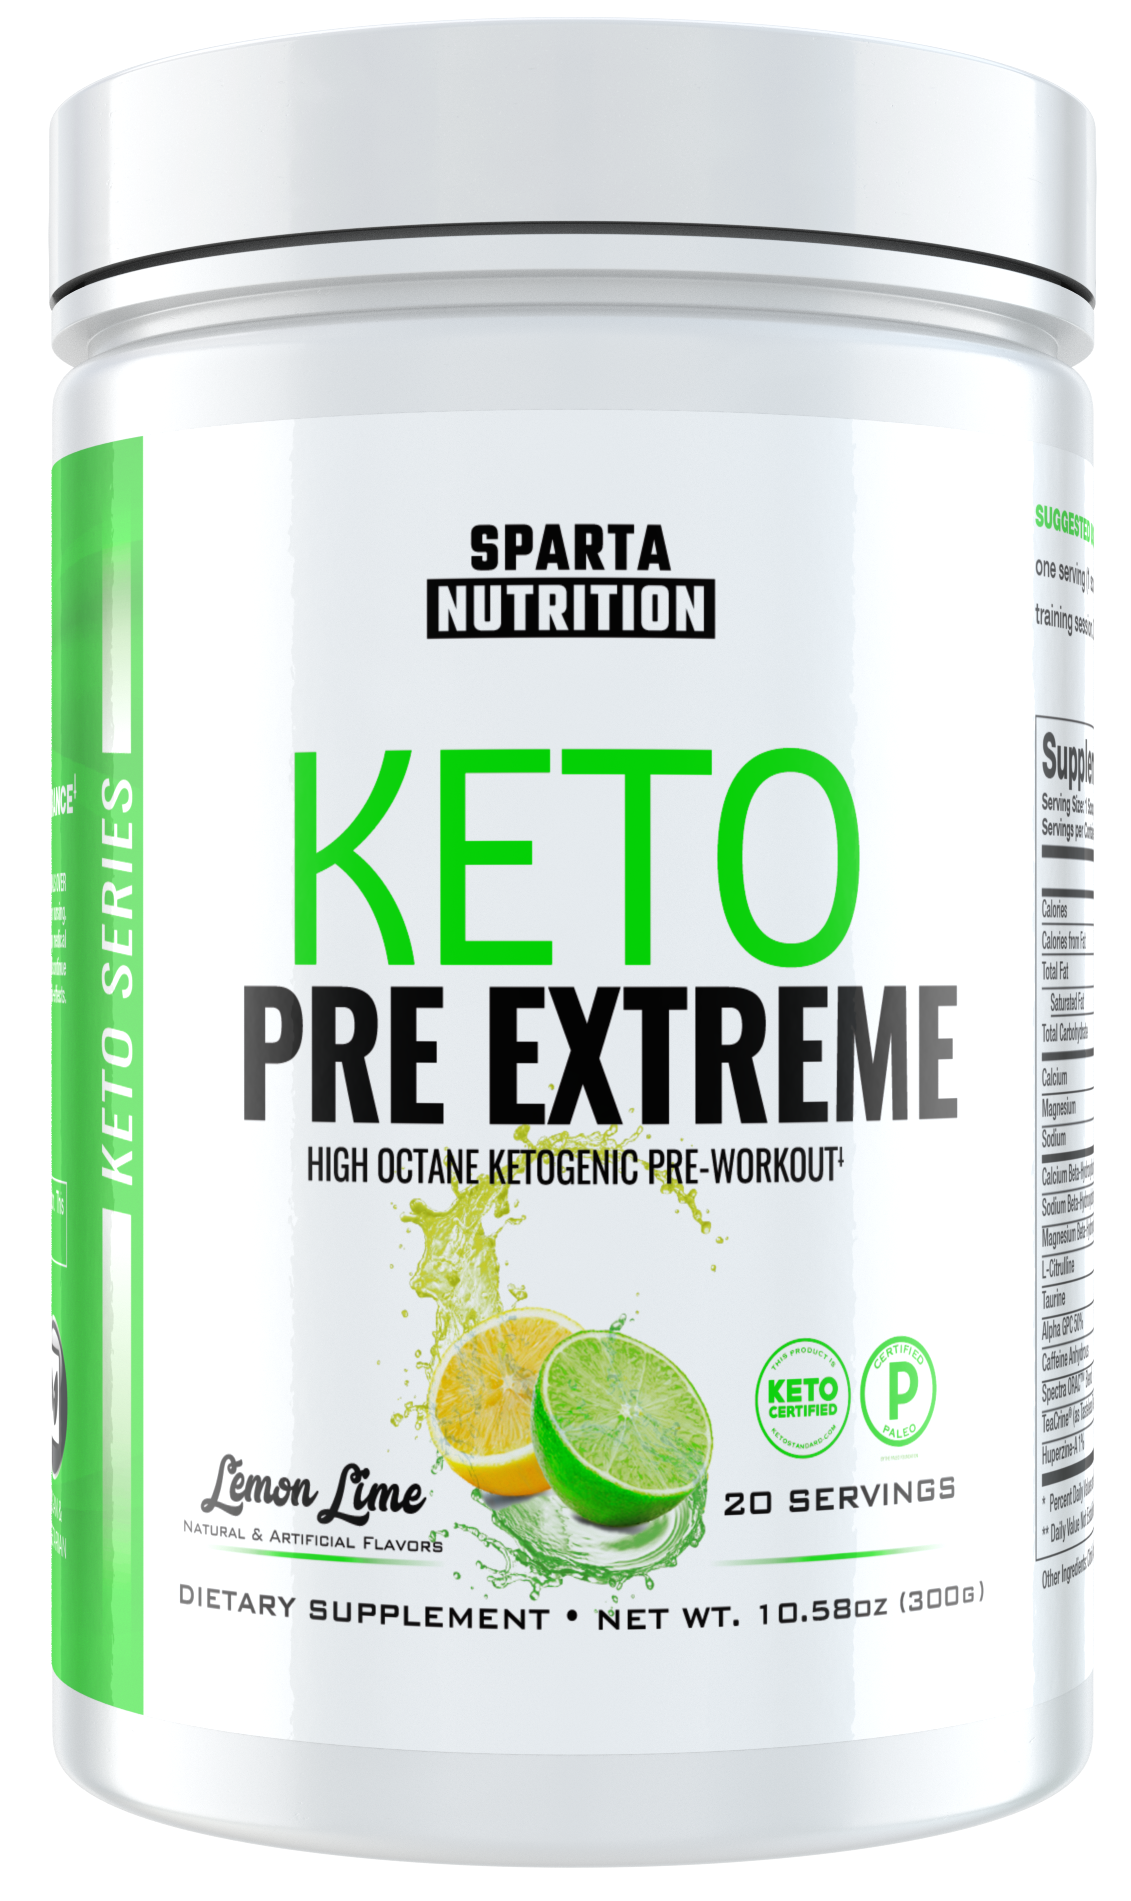 sparta-keto-pre-extreme.png